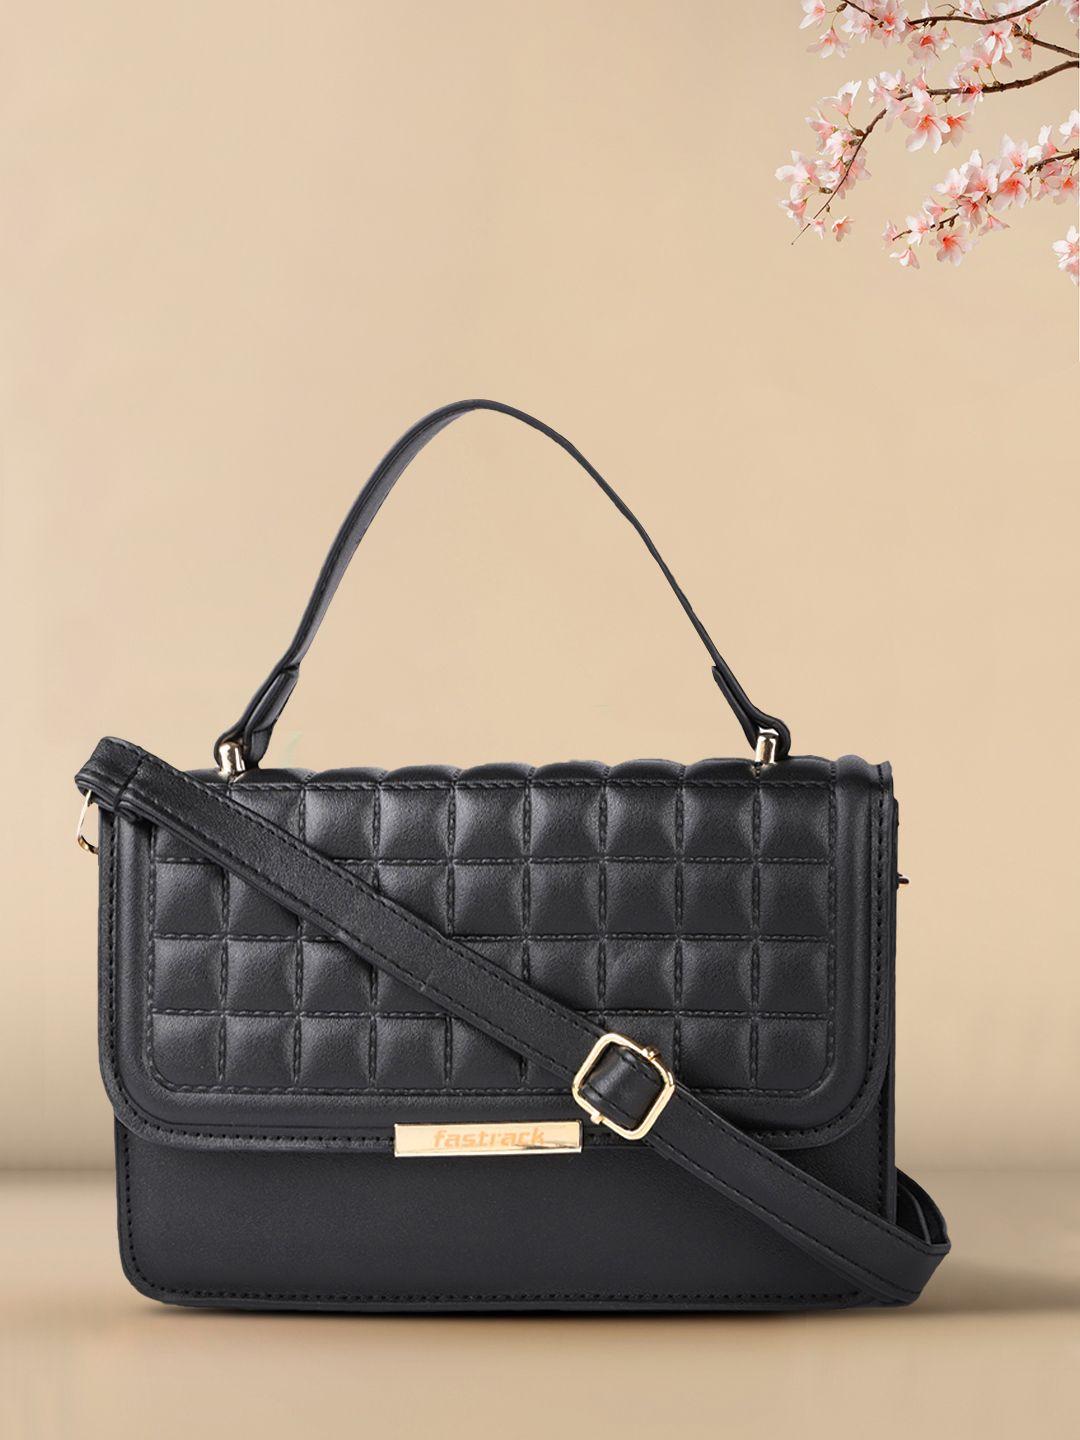 fastrack-black-textured-satchel